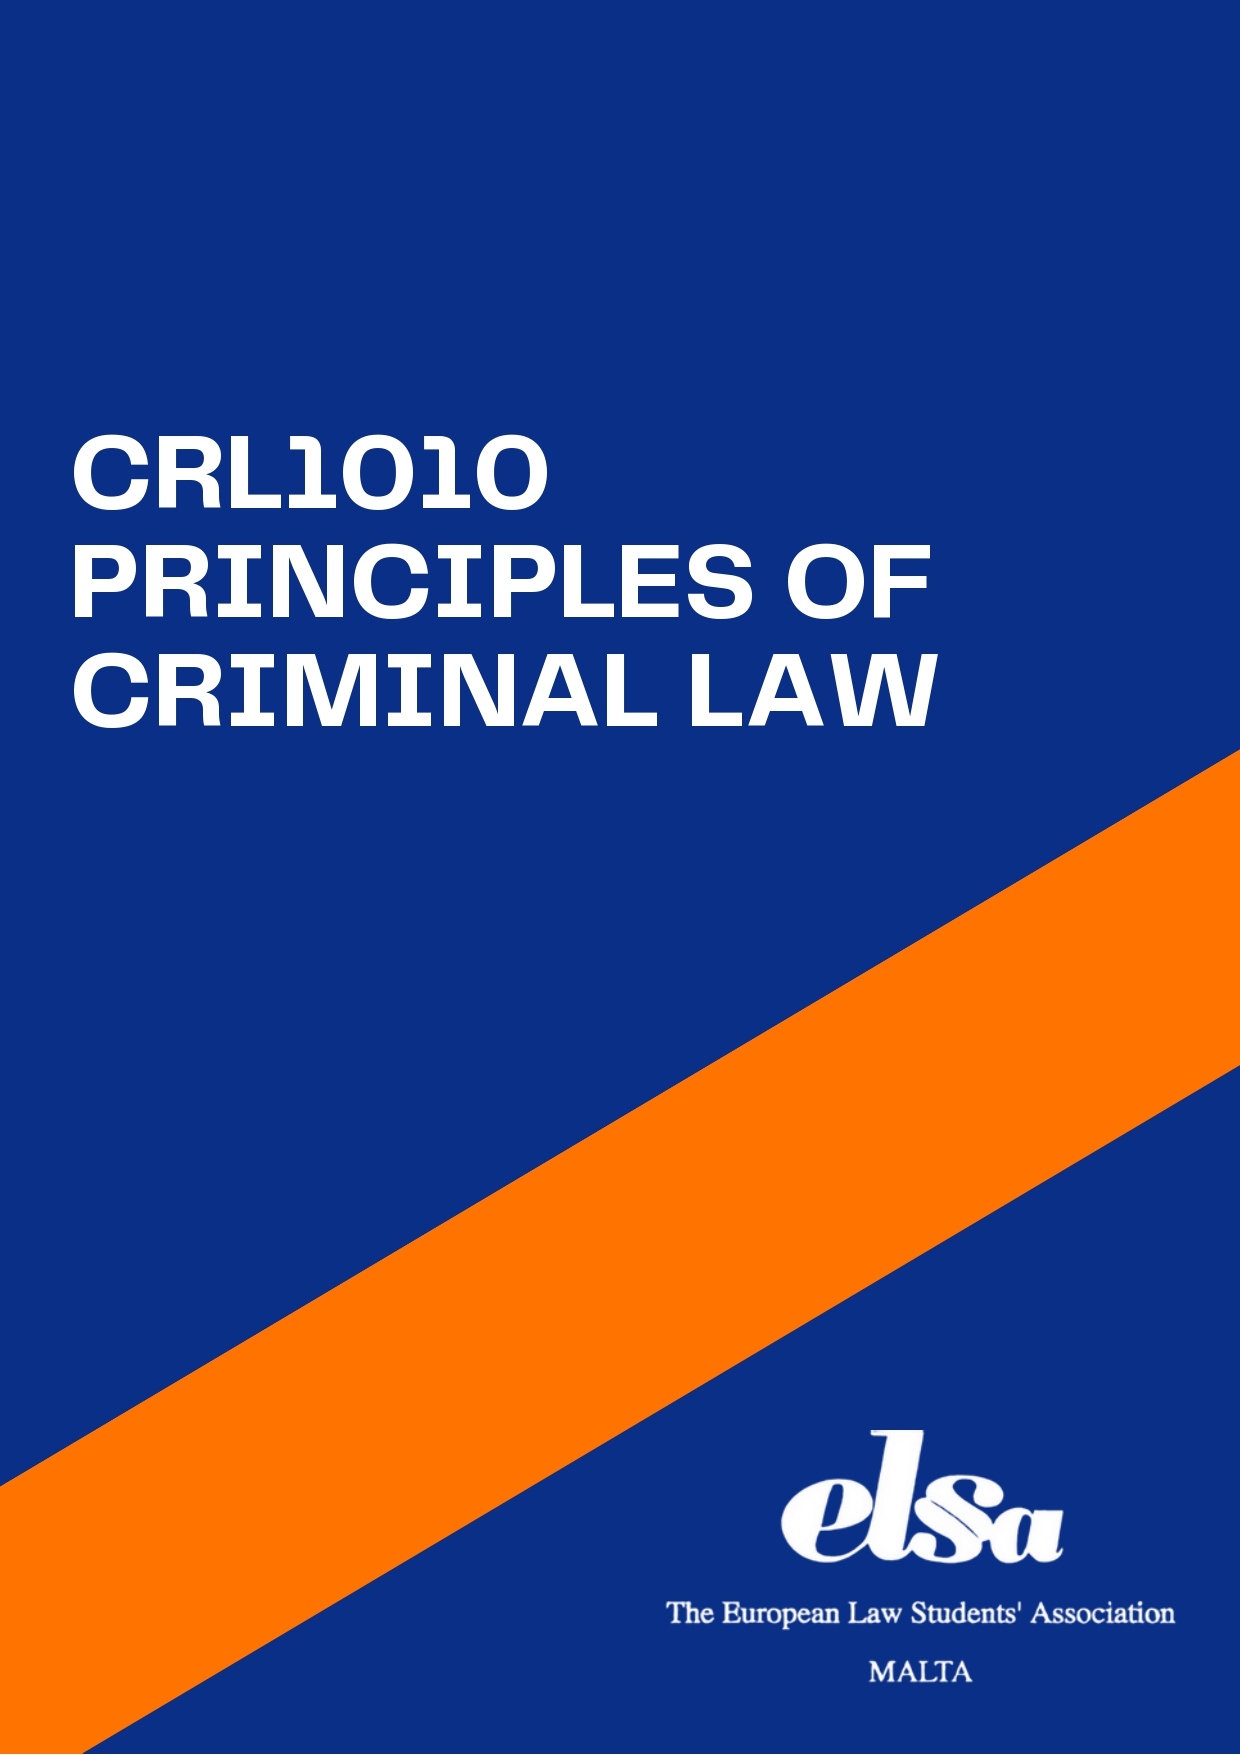 CRL1010 - Principles of Criminal Law